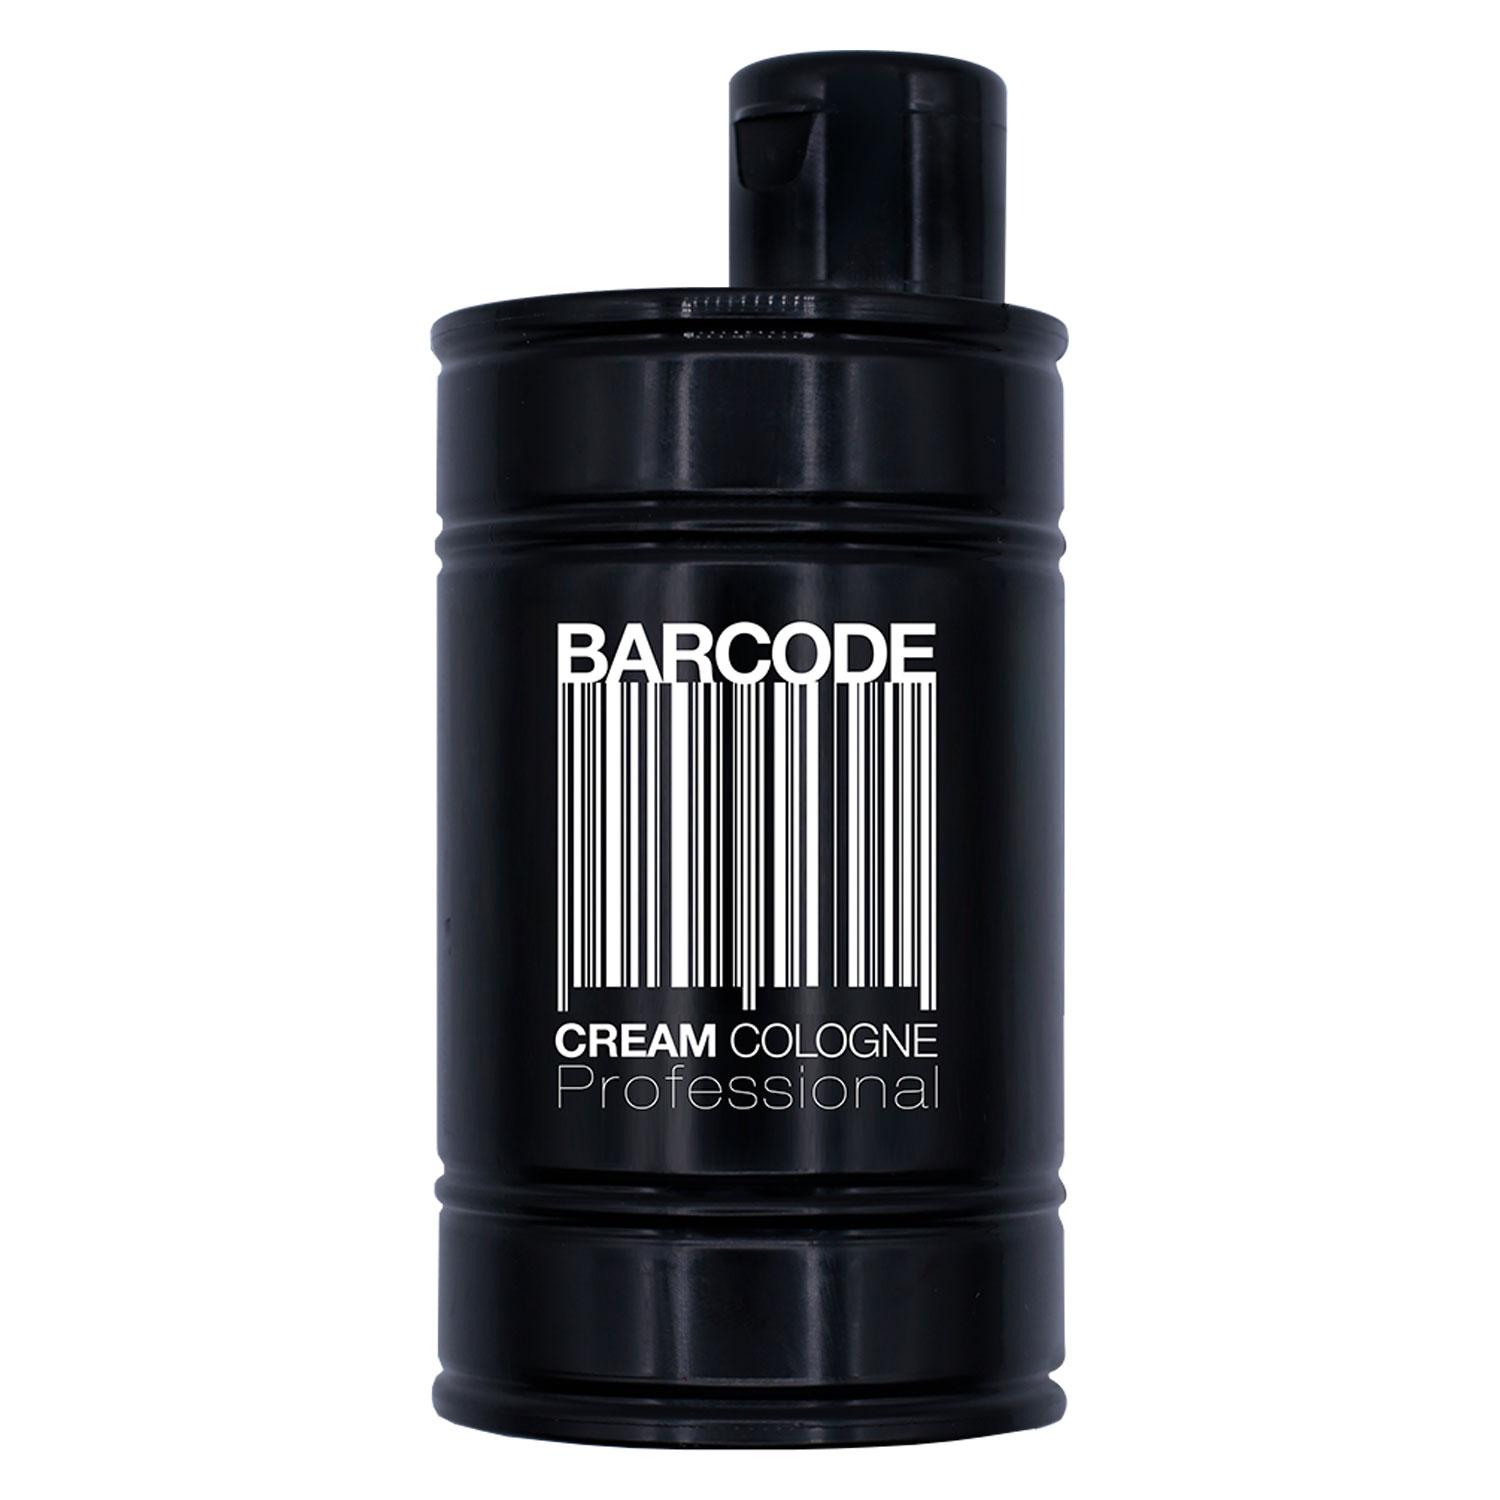 Barcode Men Series - Cream Cologne For Sensitive Skin